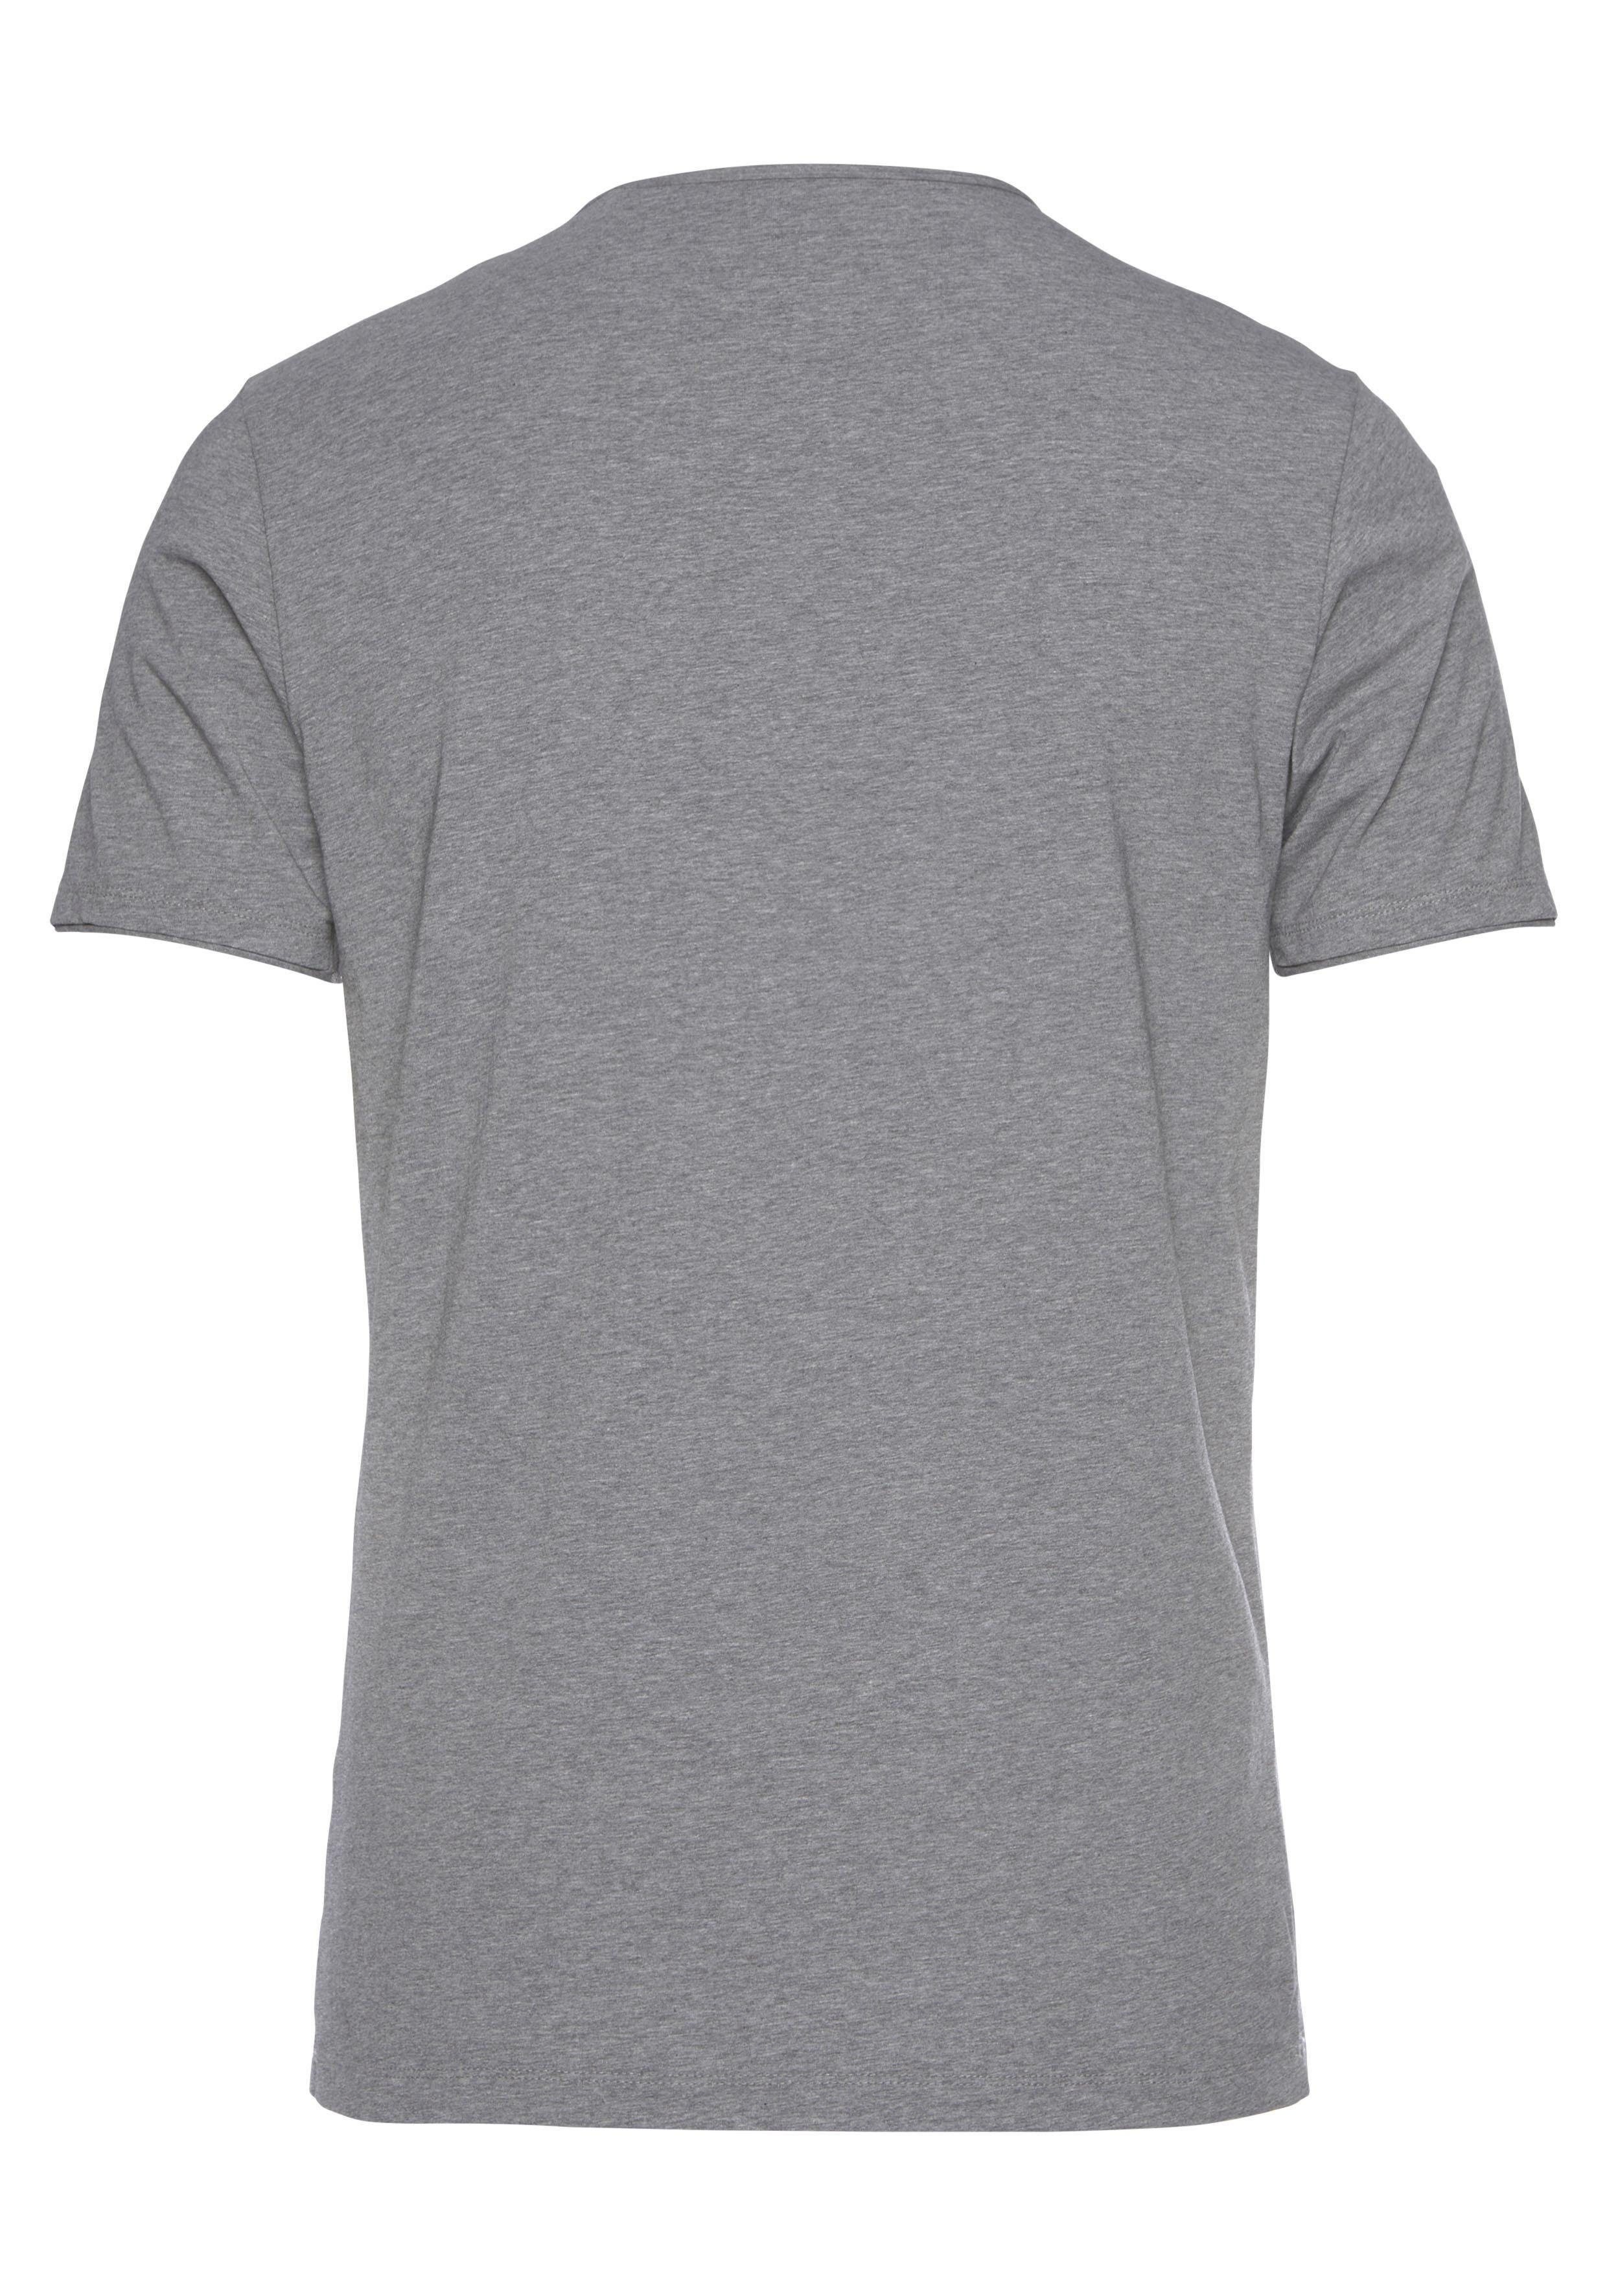 body Five Level T-Shirt aus OLYMP fit Jersey silbergrau feinem